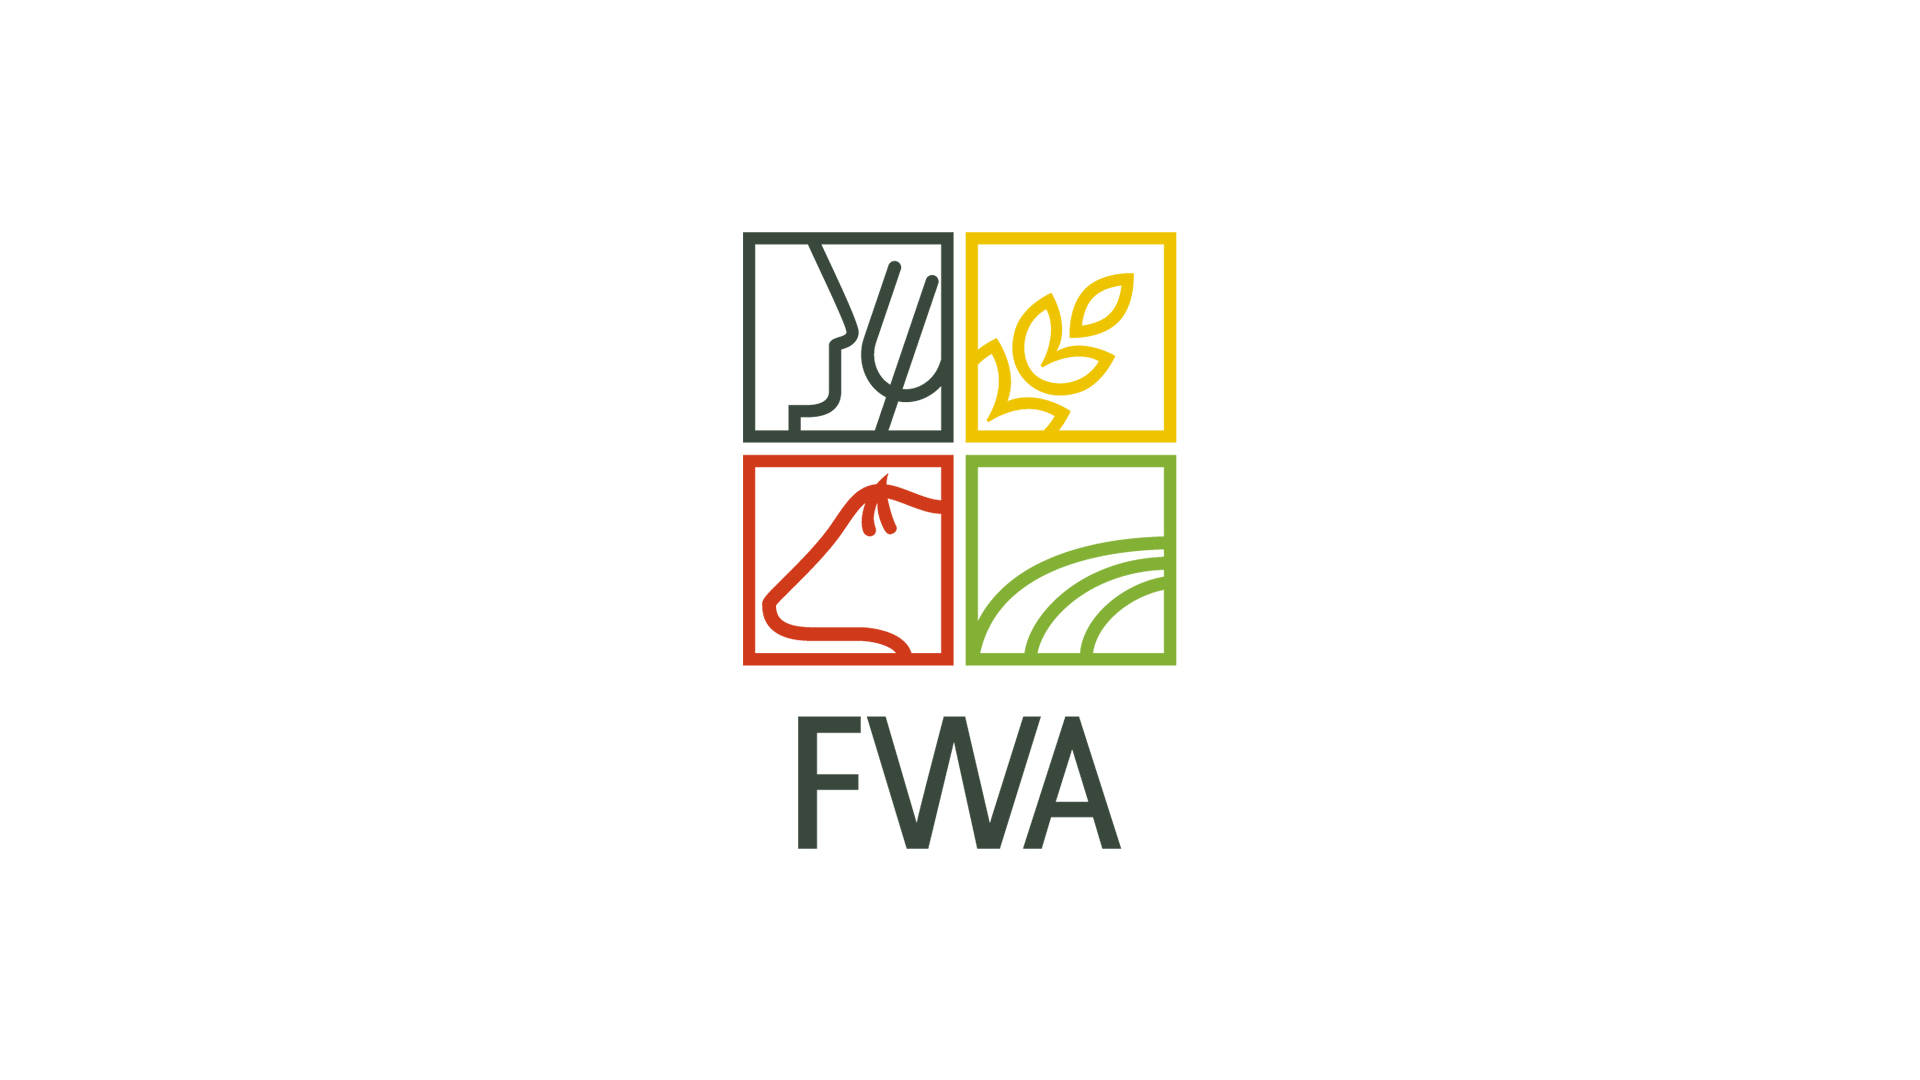 Logo FWA